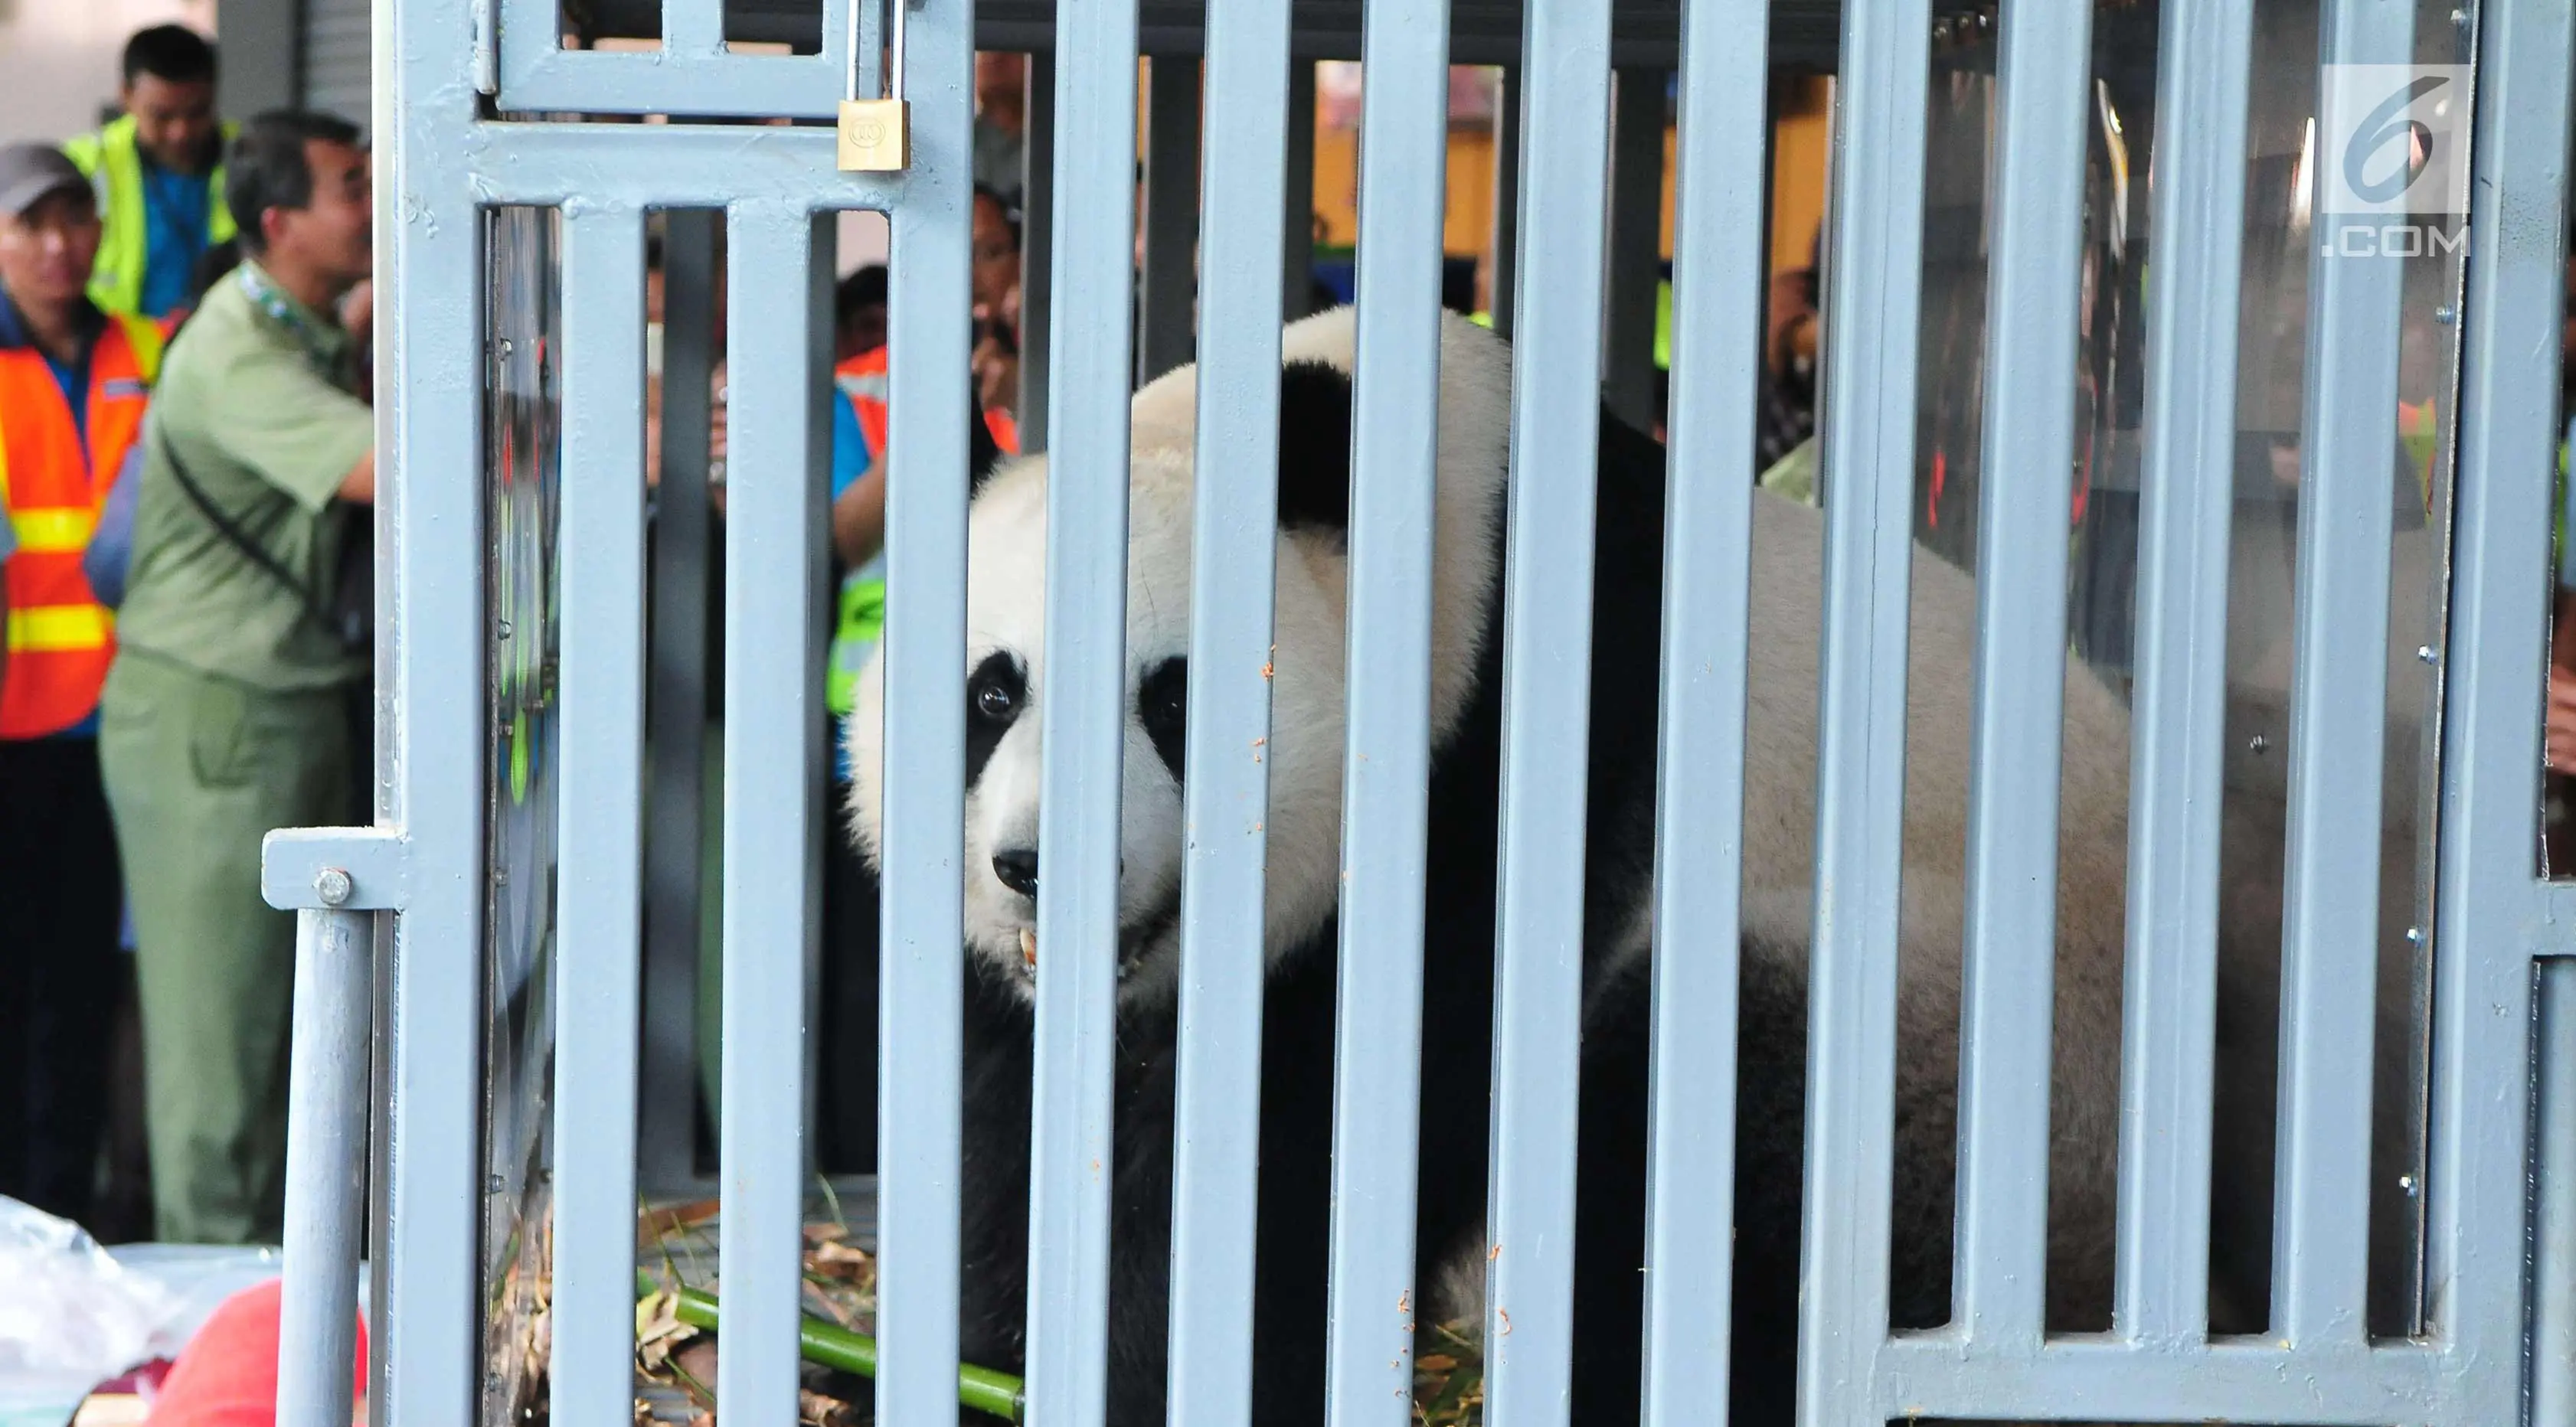 Seekor panda China berada di dalam kandang saat tiba di Bandara Soekarno-Hatta, Tangerang, Kamis (28/9). Kehadiran dua panda ini dimaknai sebagai simbol persahabatan, perdamaian, dan pengetahuan antara Indonesia dengan China. (Liputan6.com/Helmi Afandi)